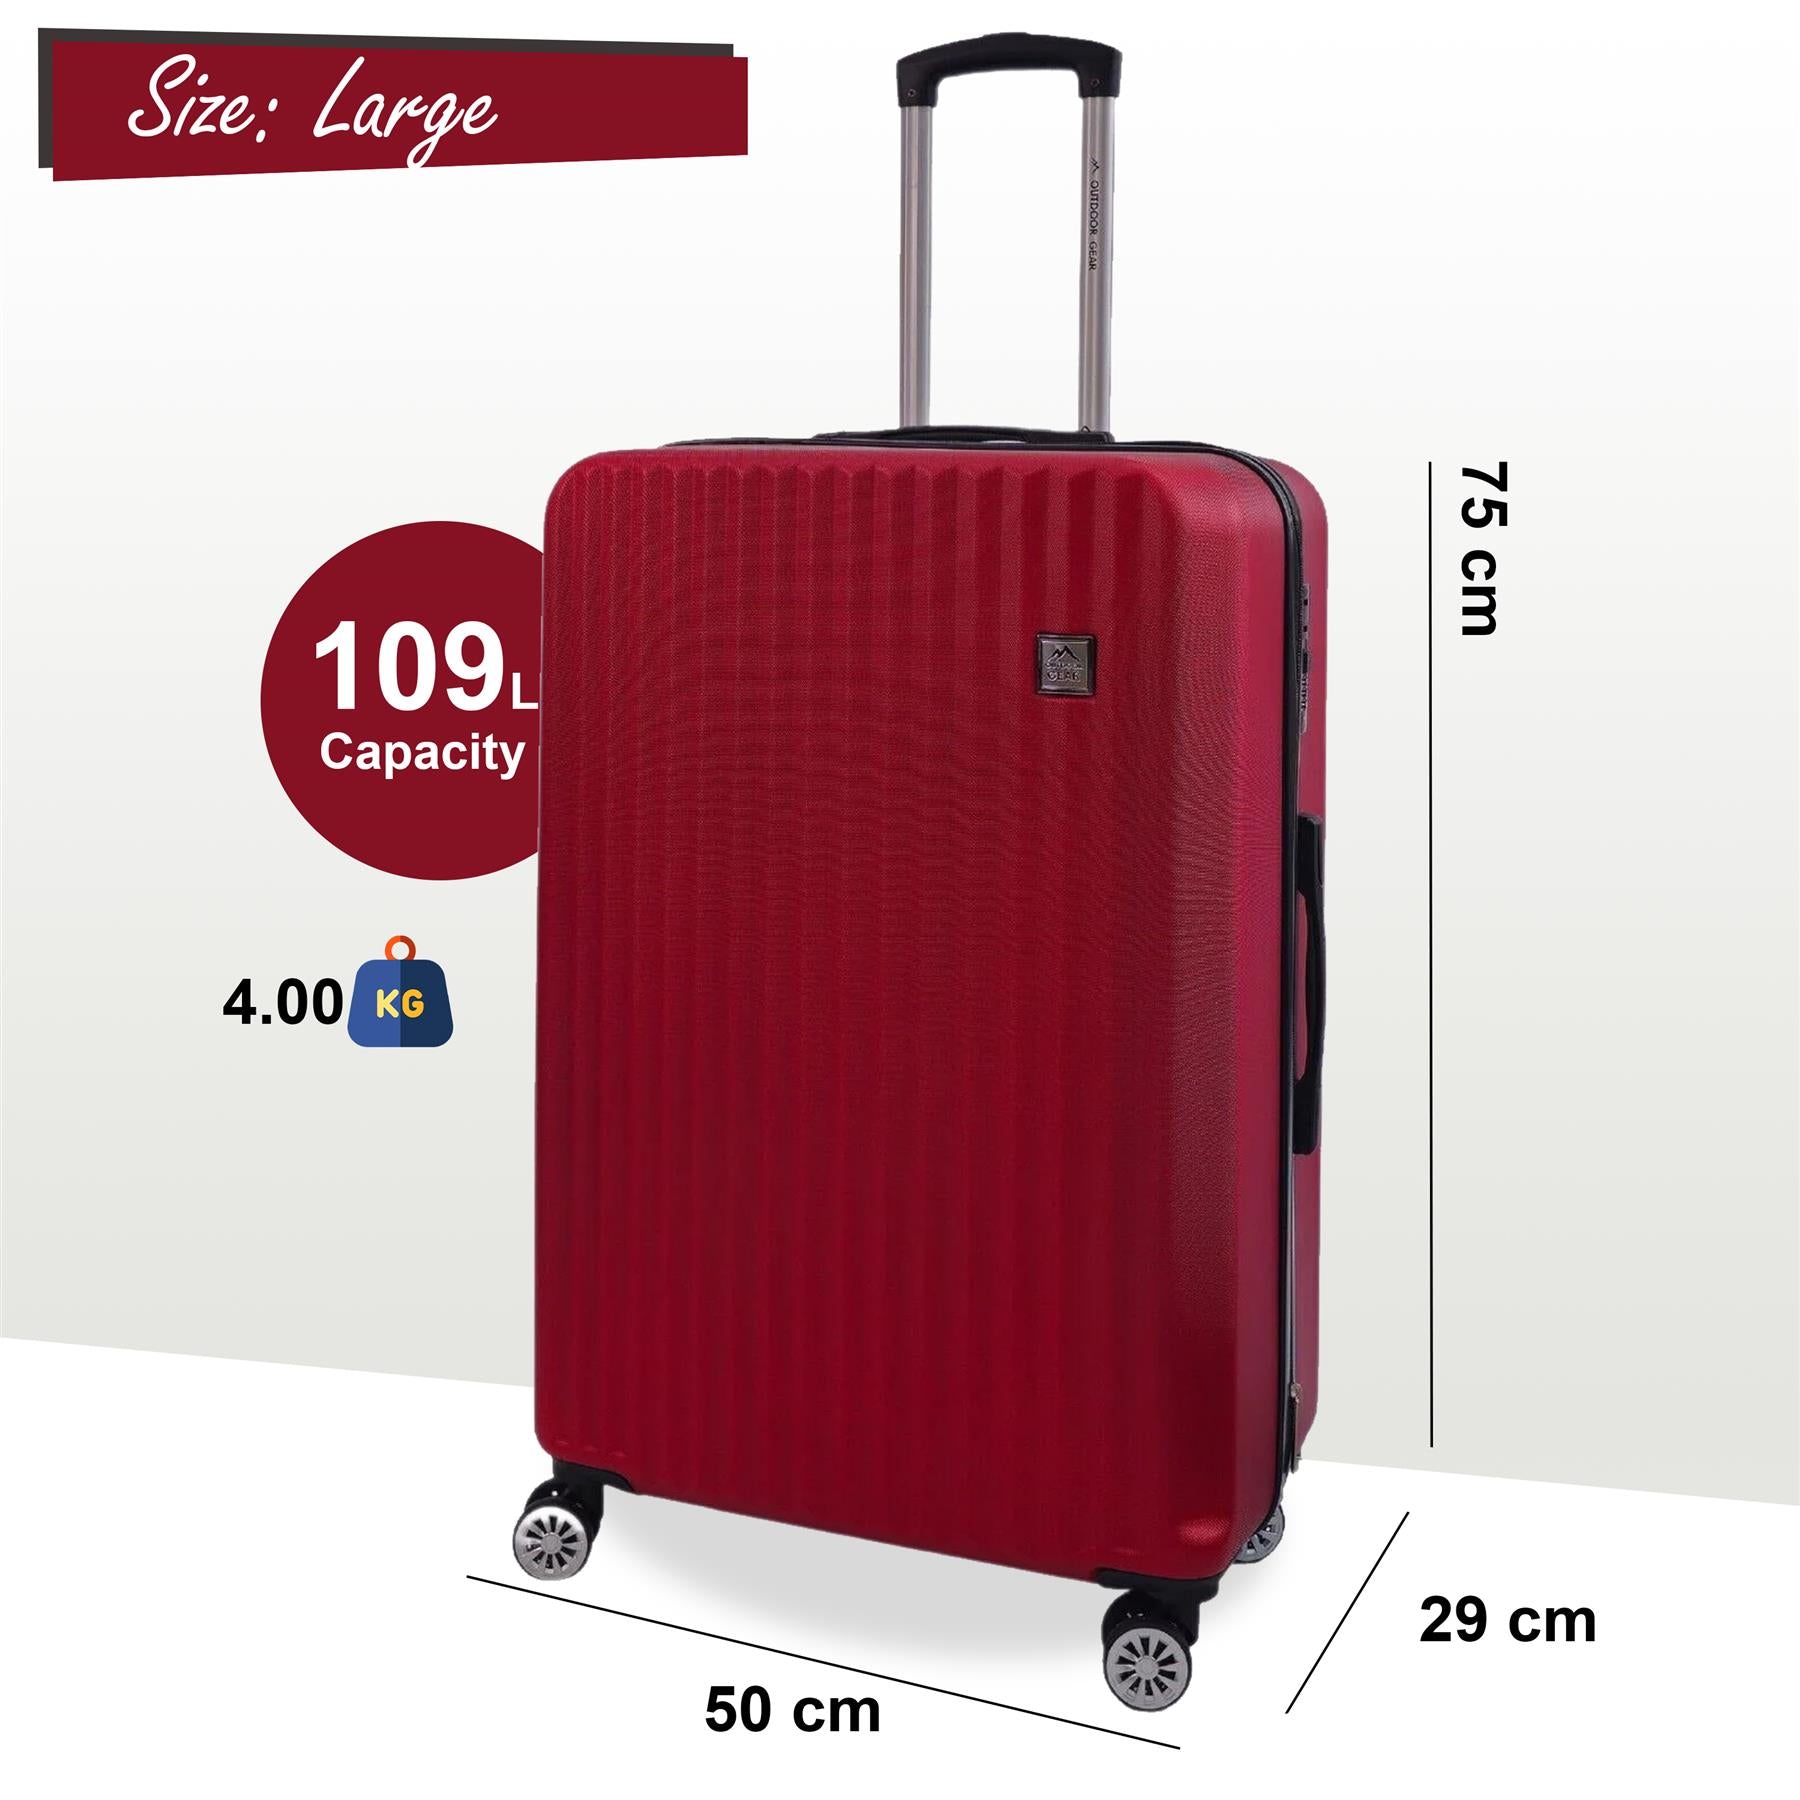 Albertville Large Hard Shell Suitcase in Burgundy